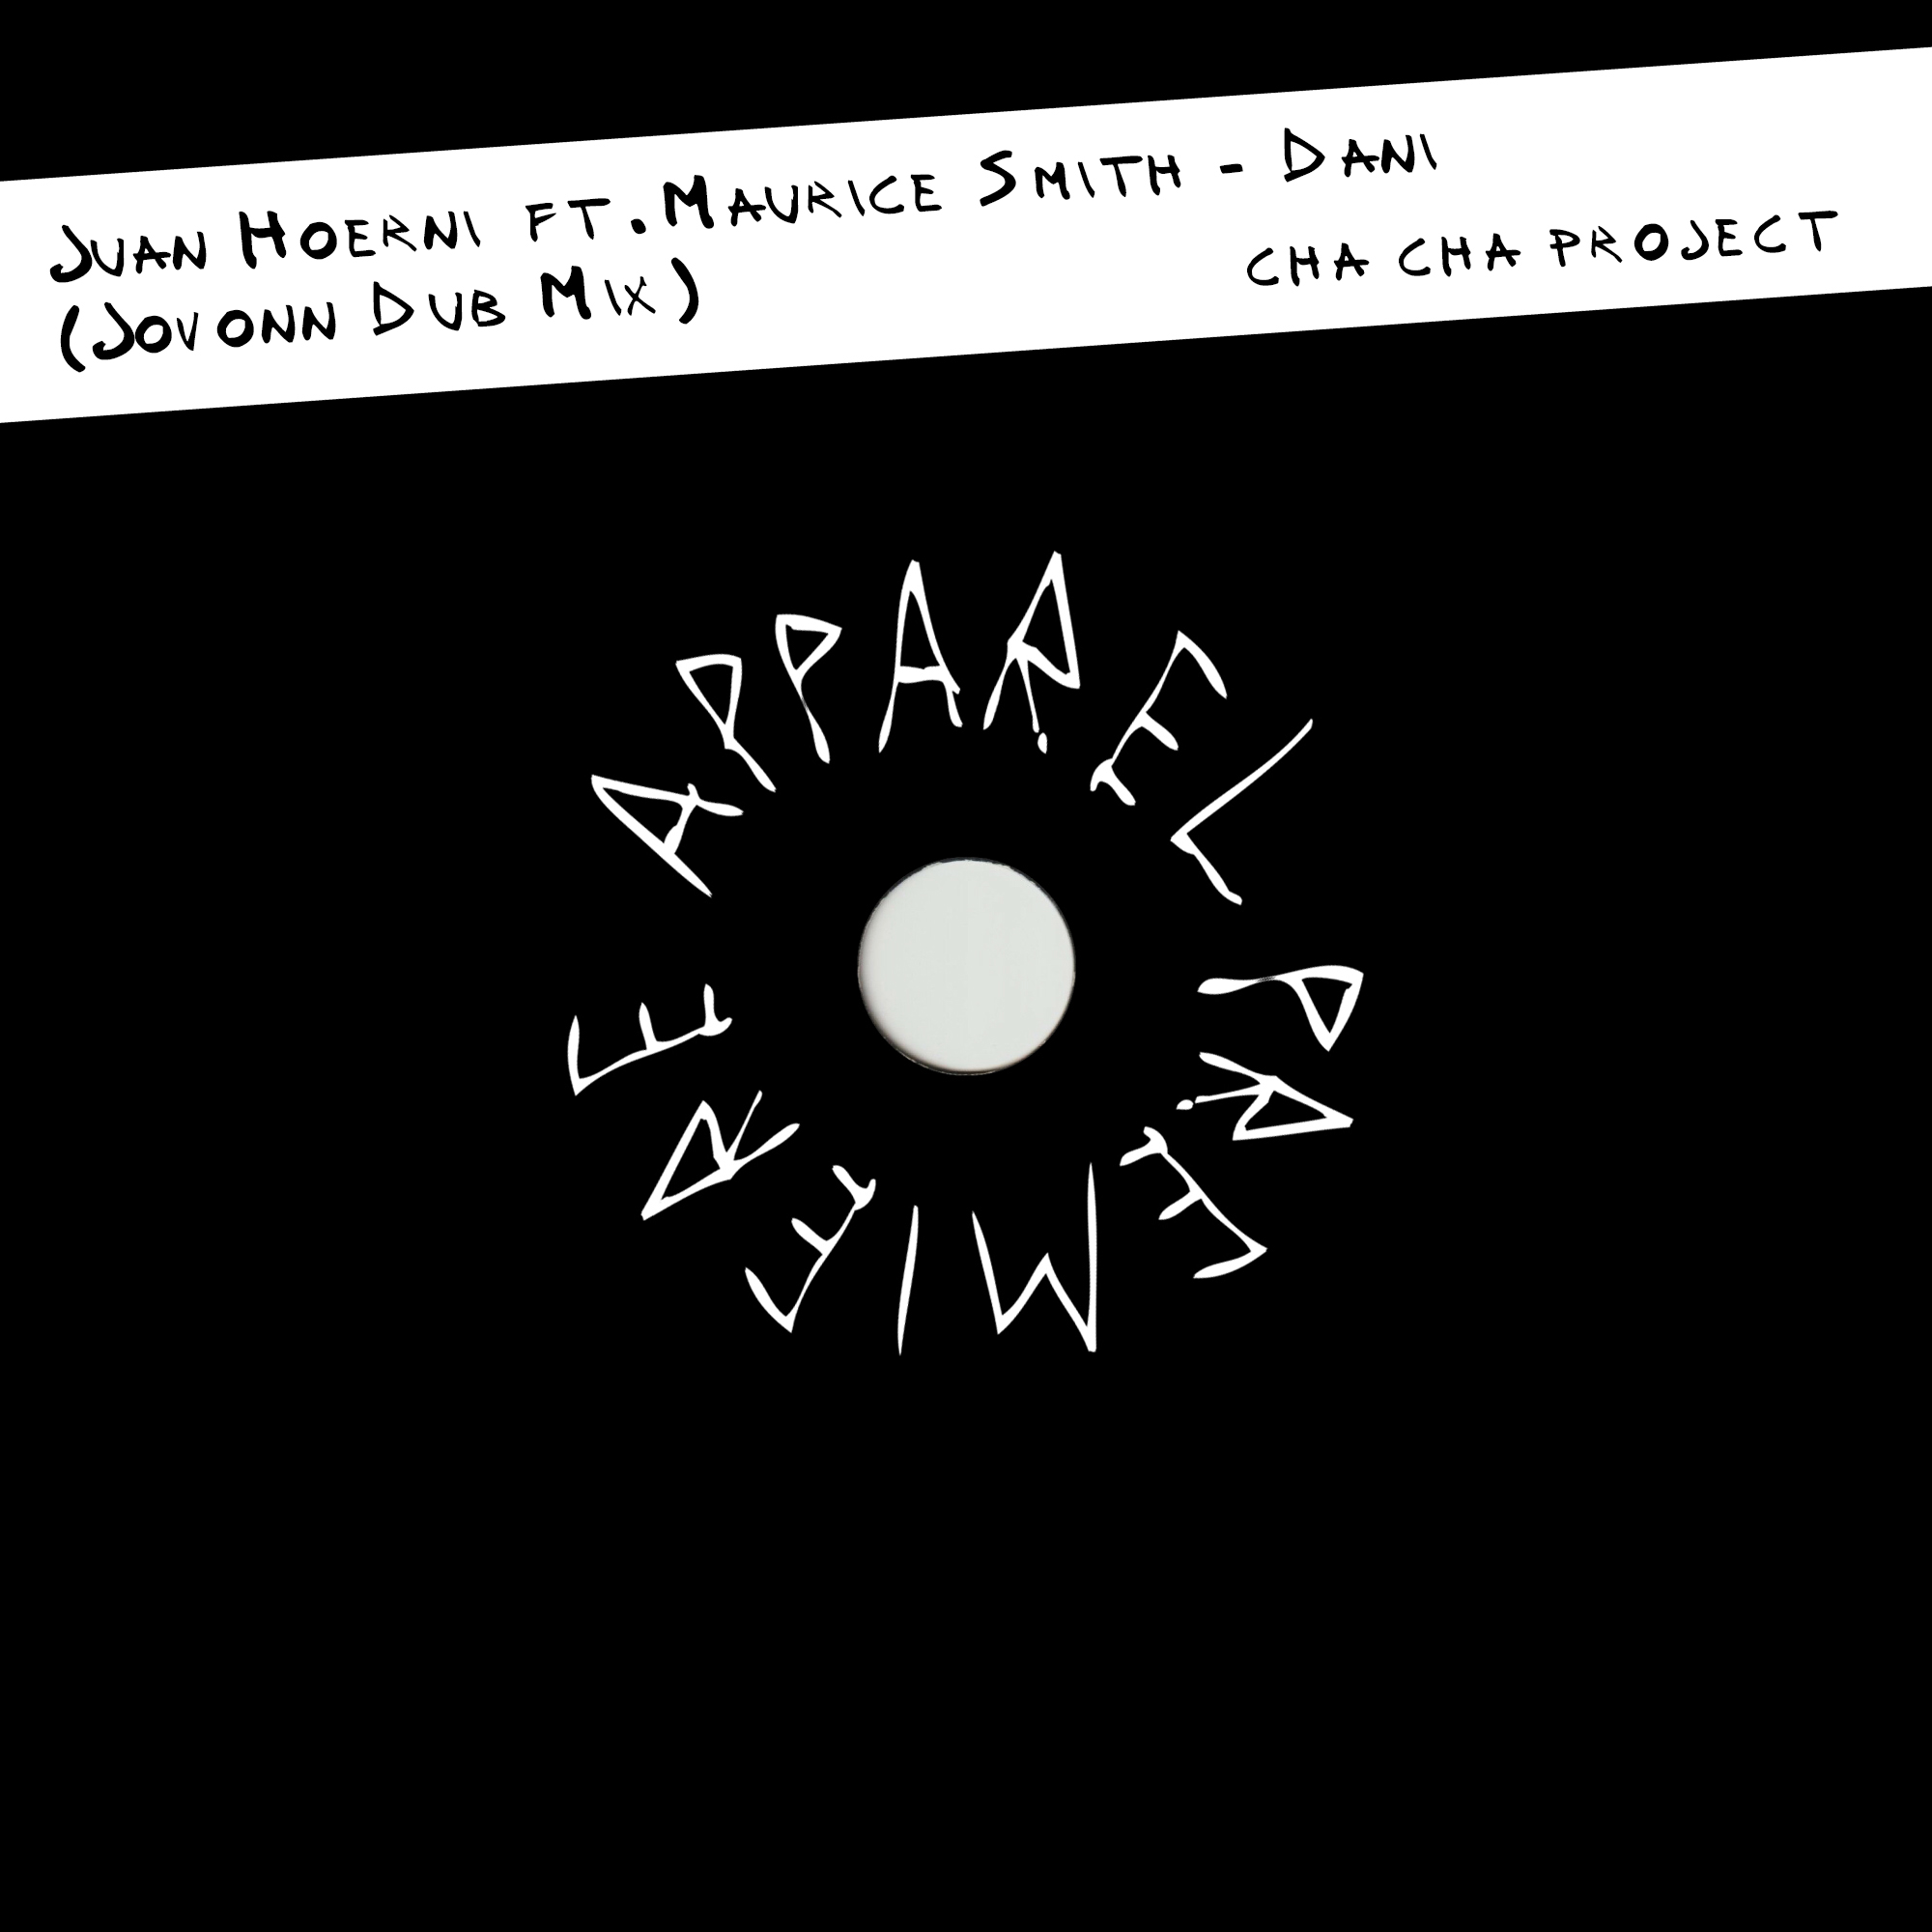 APPAREL PREMIERE Juan Hoerni ft. Maurice Smith – Dani (Jovonn Dub Mix) [Cha Cha Project]